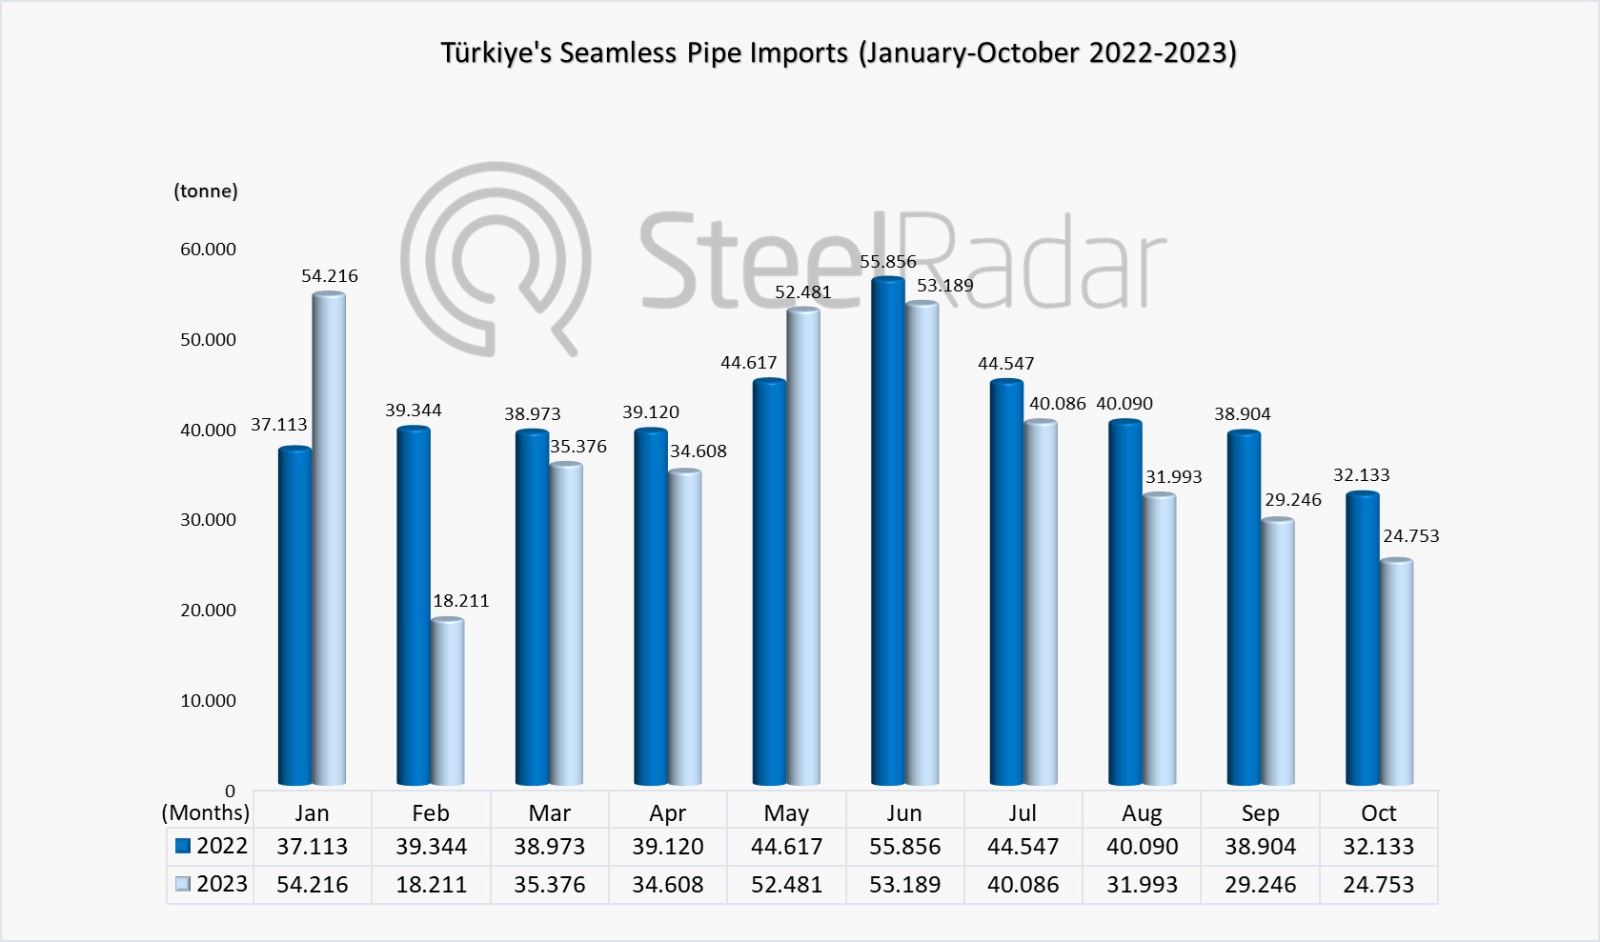 Türkiye's seamless pipe imports in October decreased by 22.9%